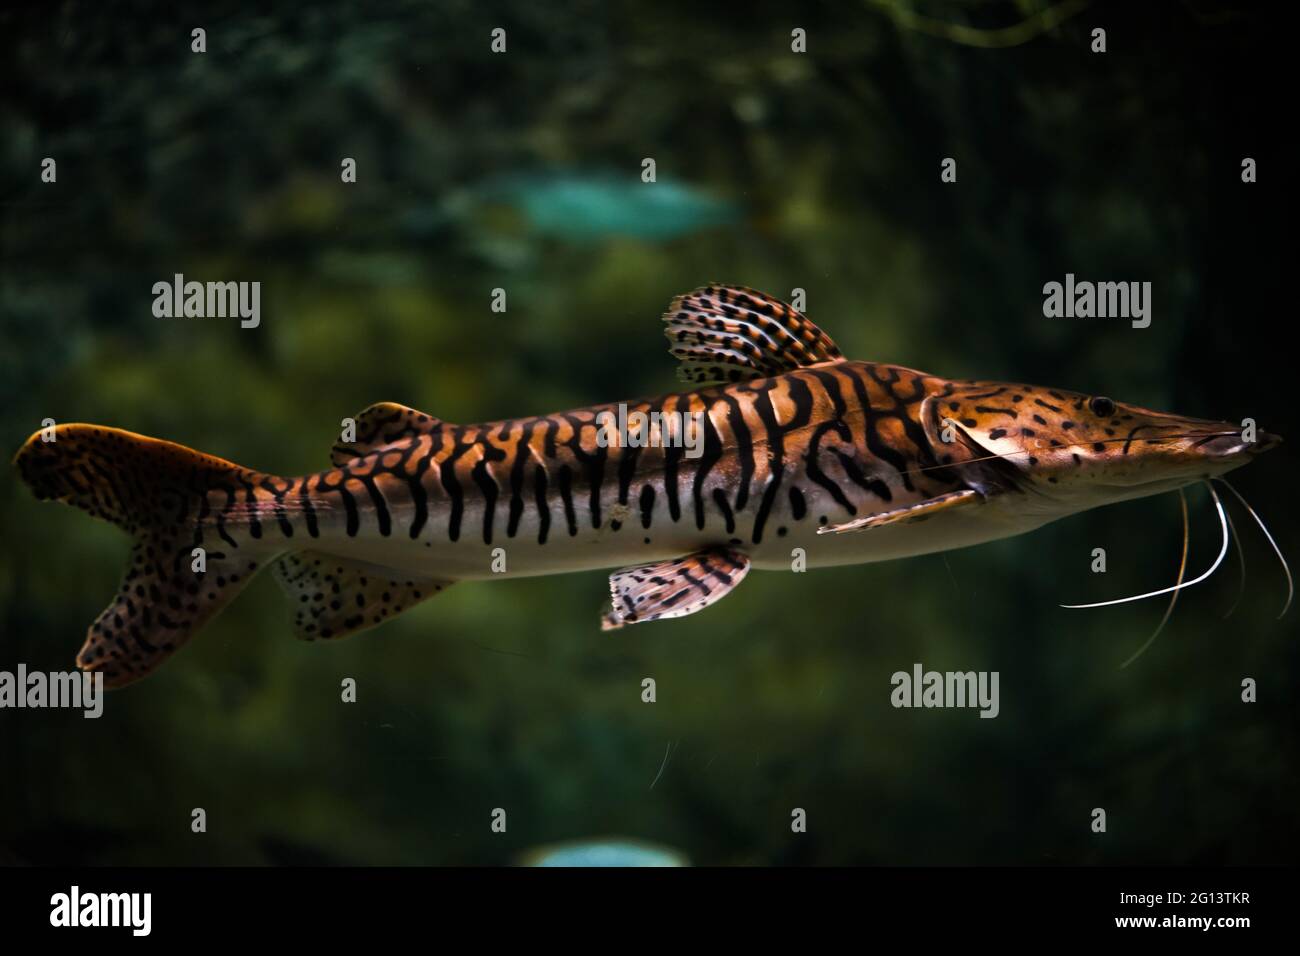 Closeup shot of a Spotted gar fish swimming in the aquarium Stock Photo